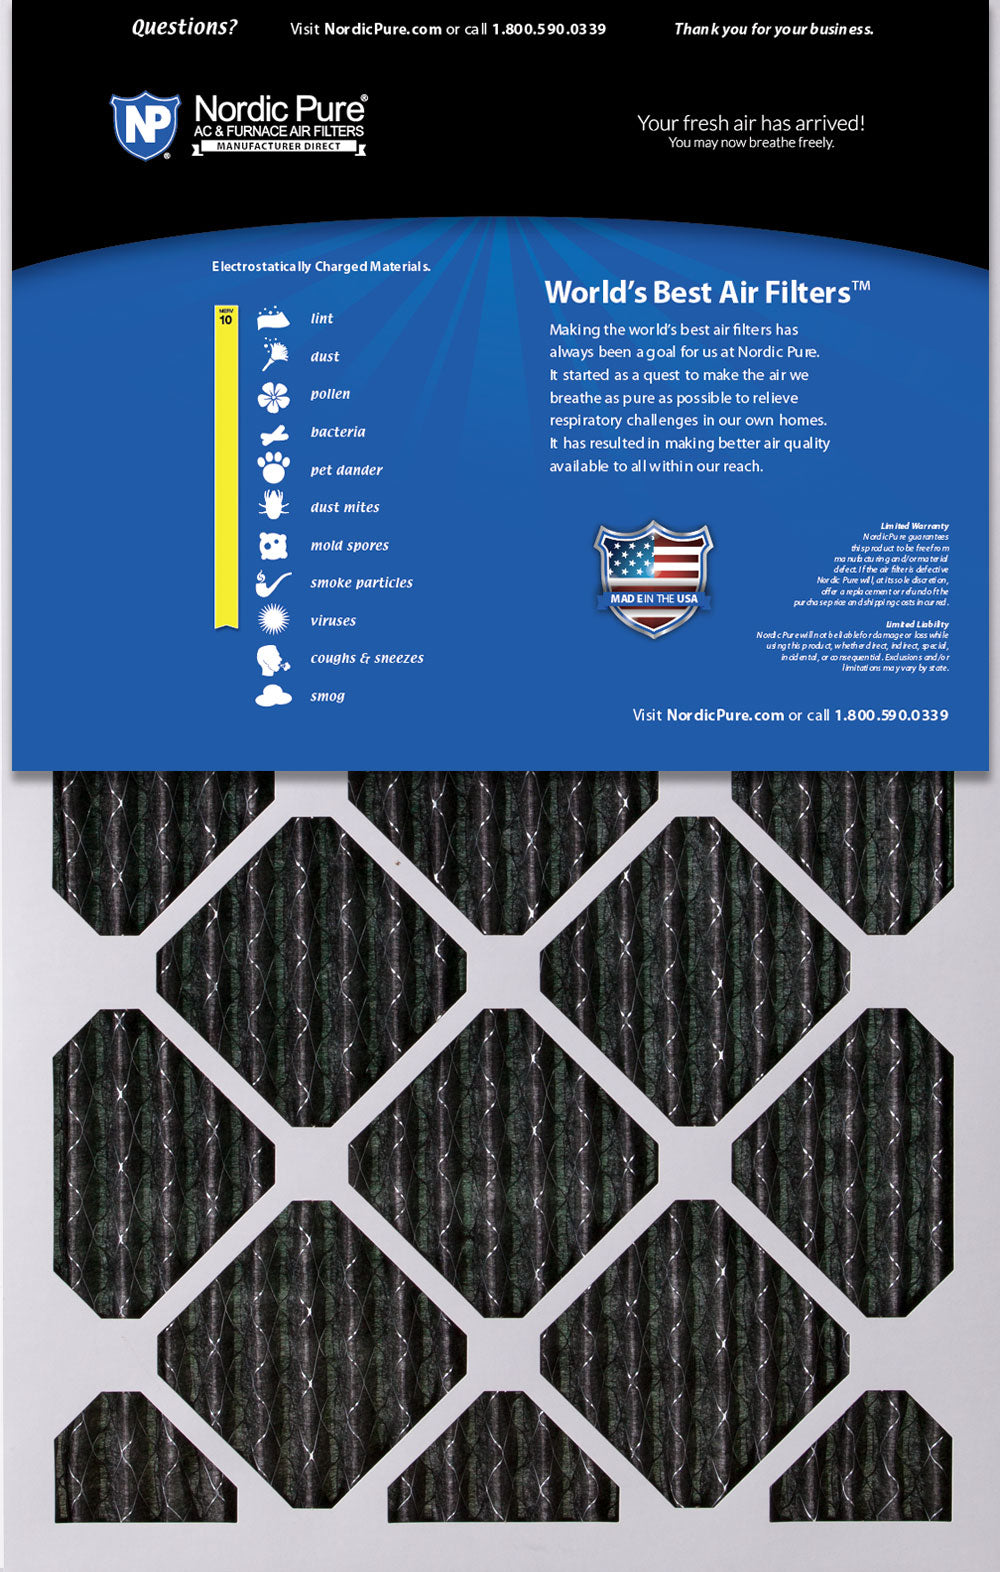 25x28x1 Exact MERV 10 Plus Carbon AC Furnace Filters